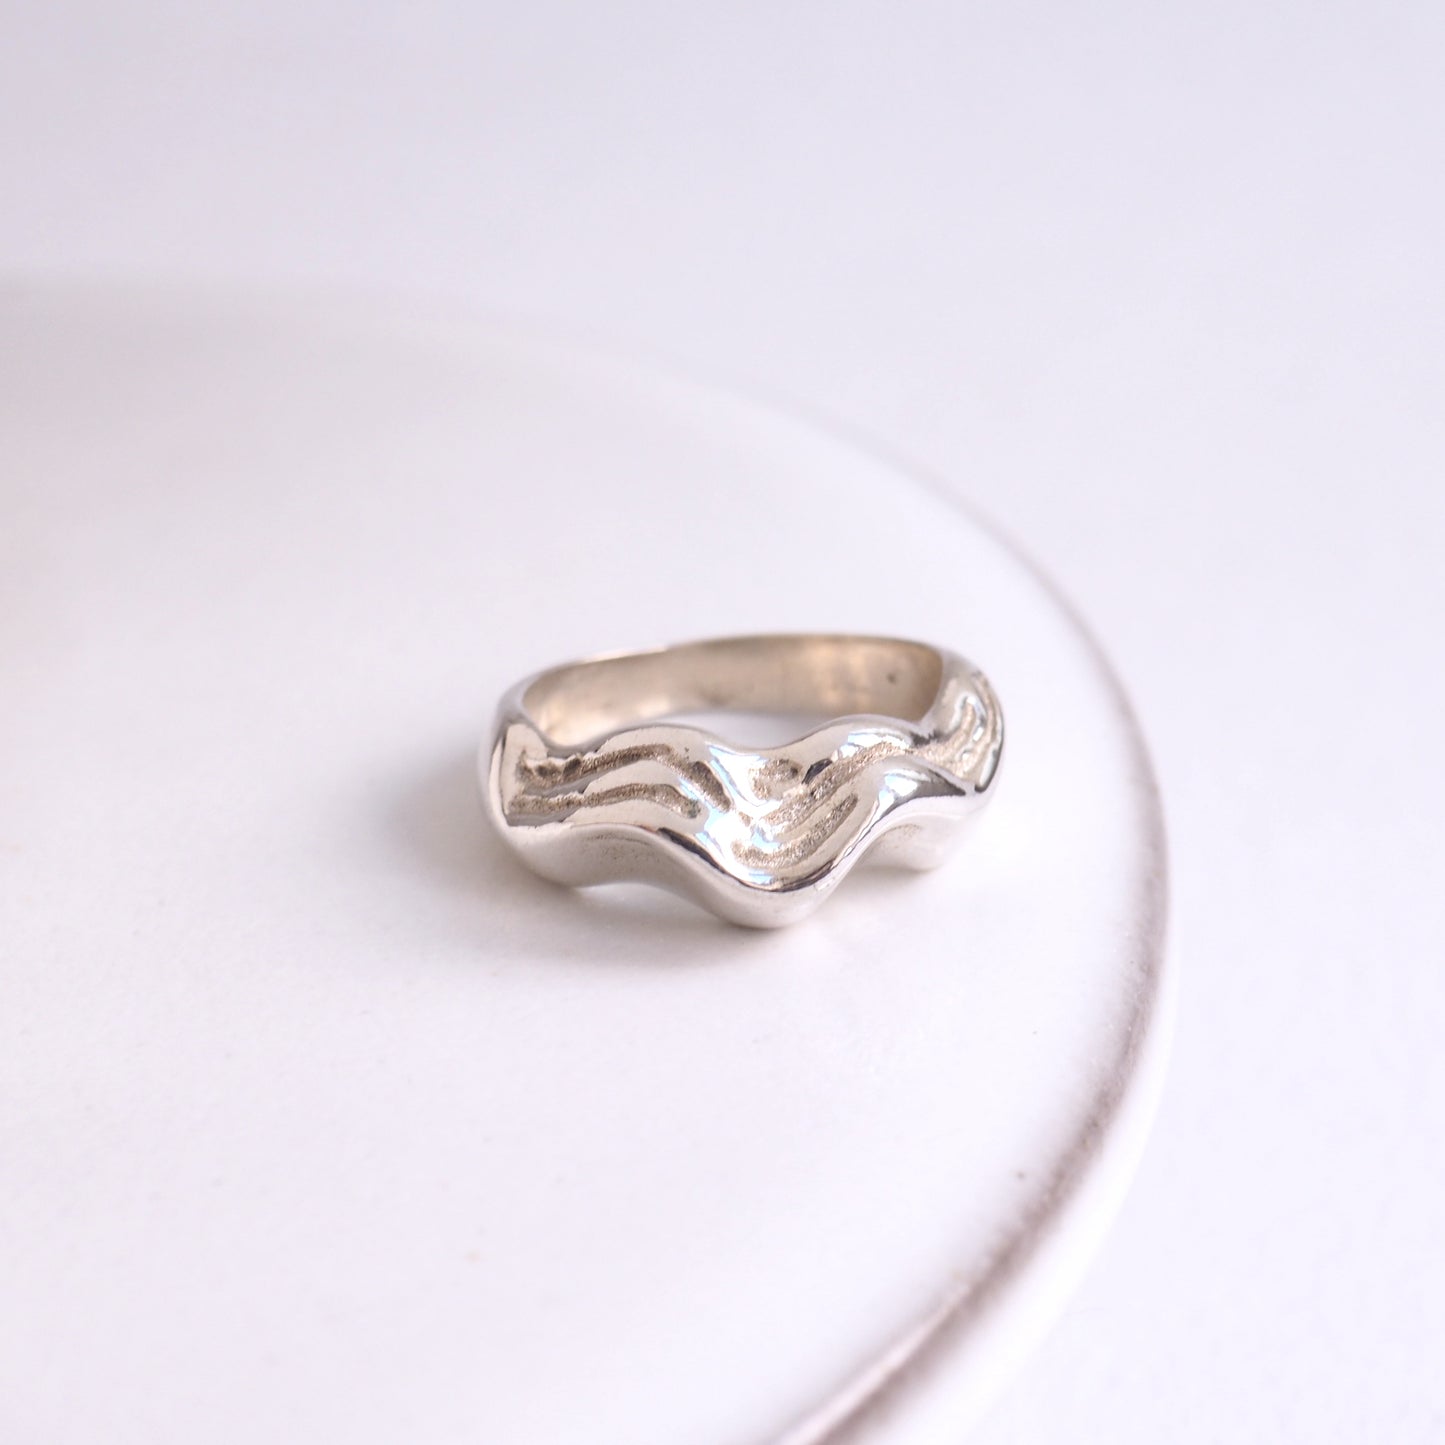  jewelry ring silver gold handmade handcrafted fashion custom bespoke 